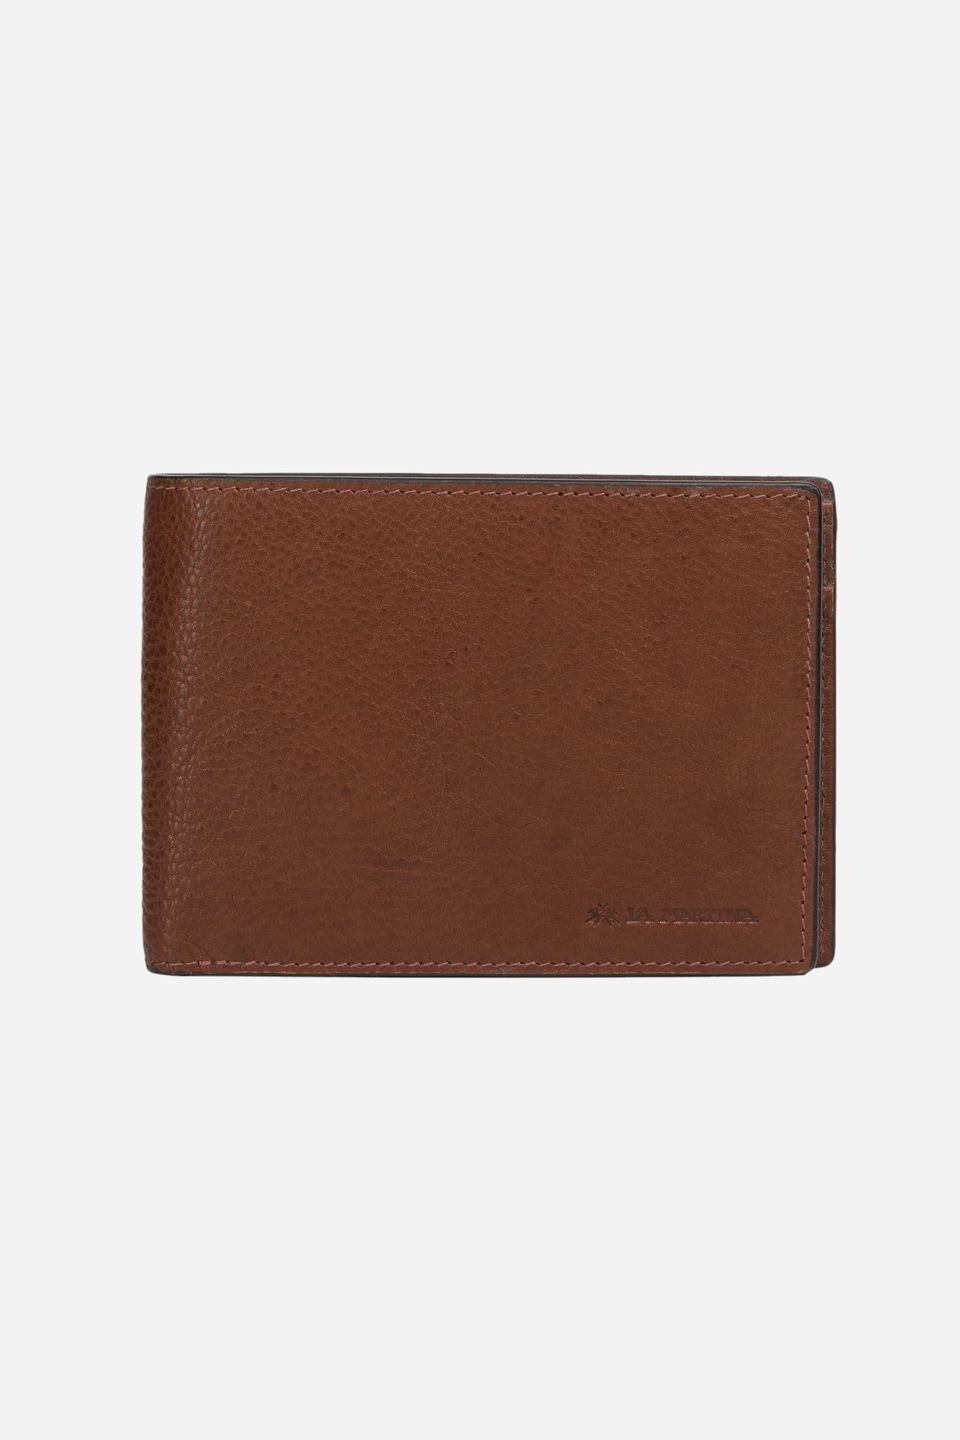 Leather wallet - Paulo | La Martina - Official Online Shop